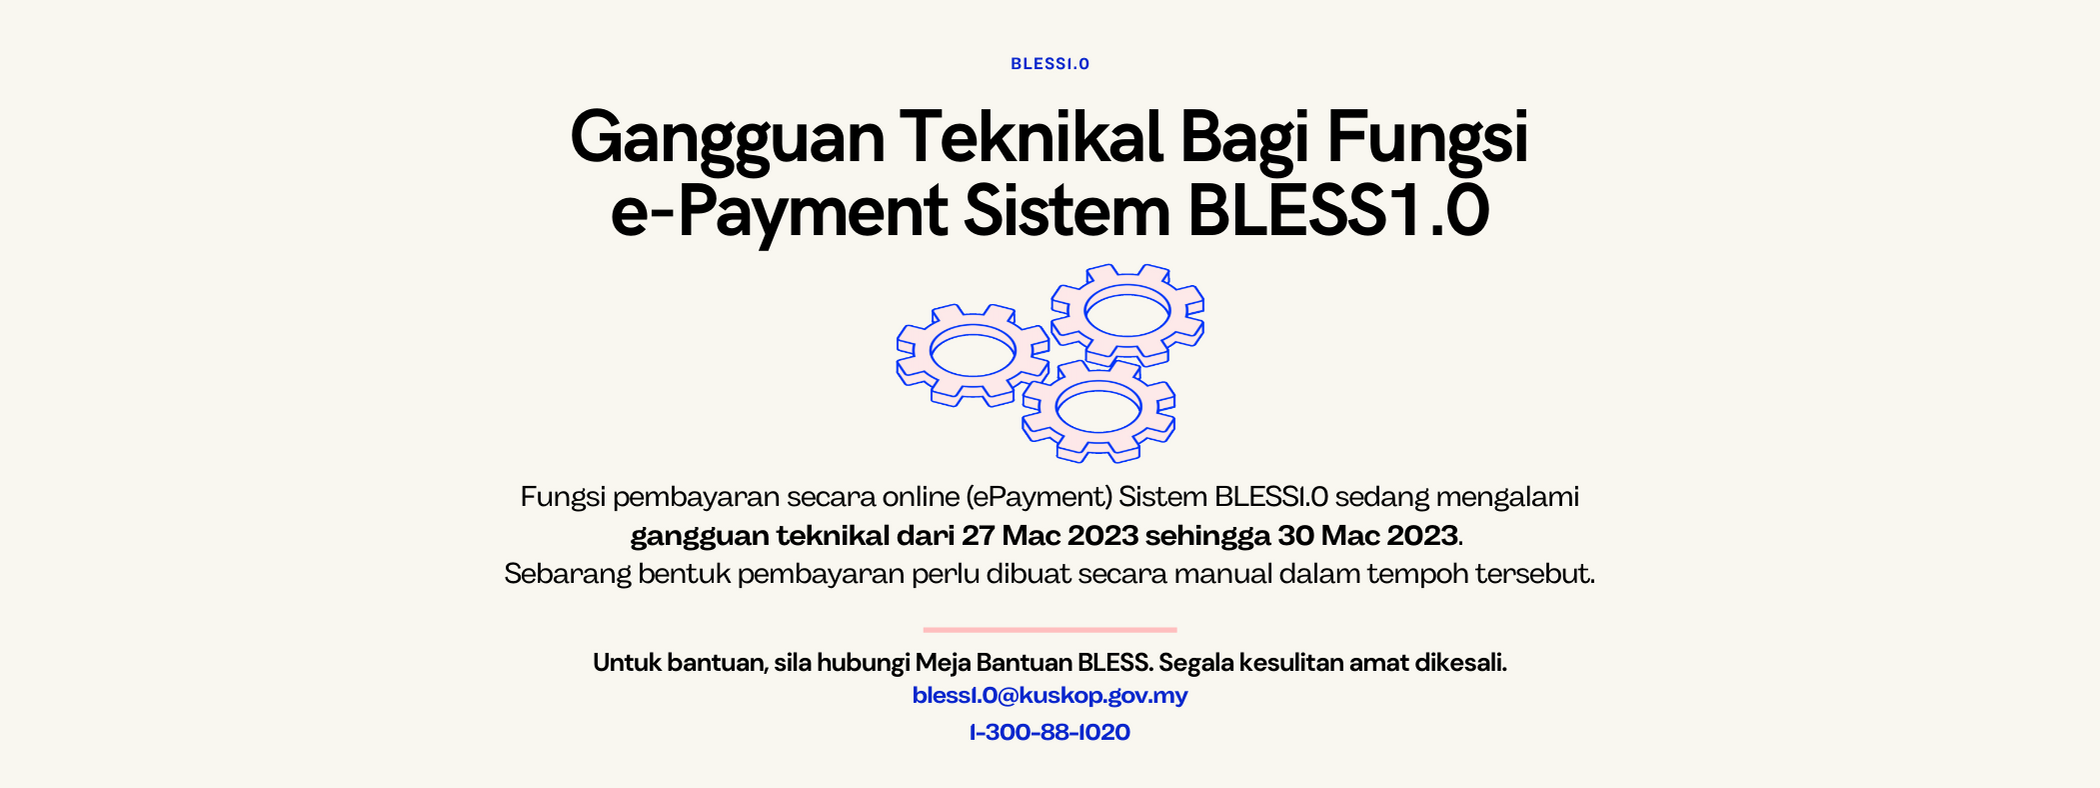 Gangguan Teknikal Bagi Fungsi e-Payment Sistem BLESS1.0 (27 - 30 Mac 2023)